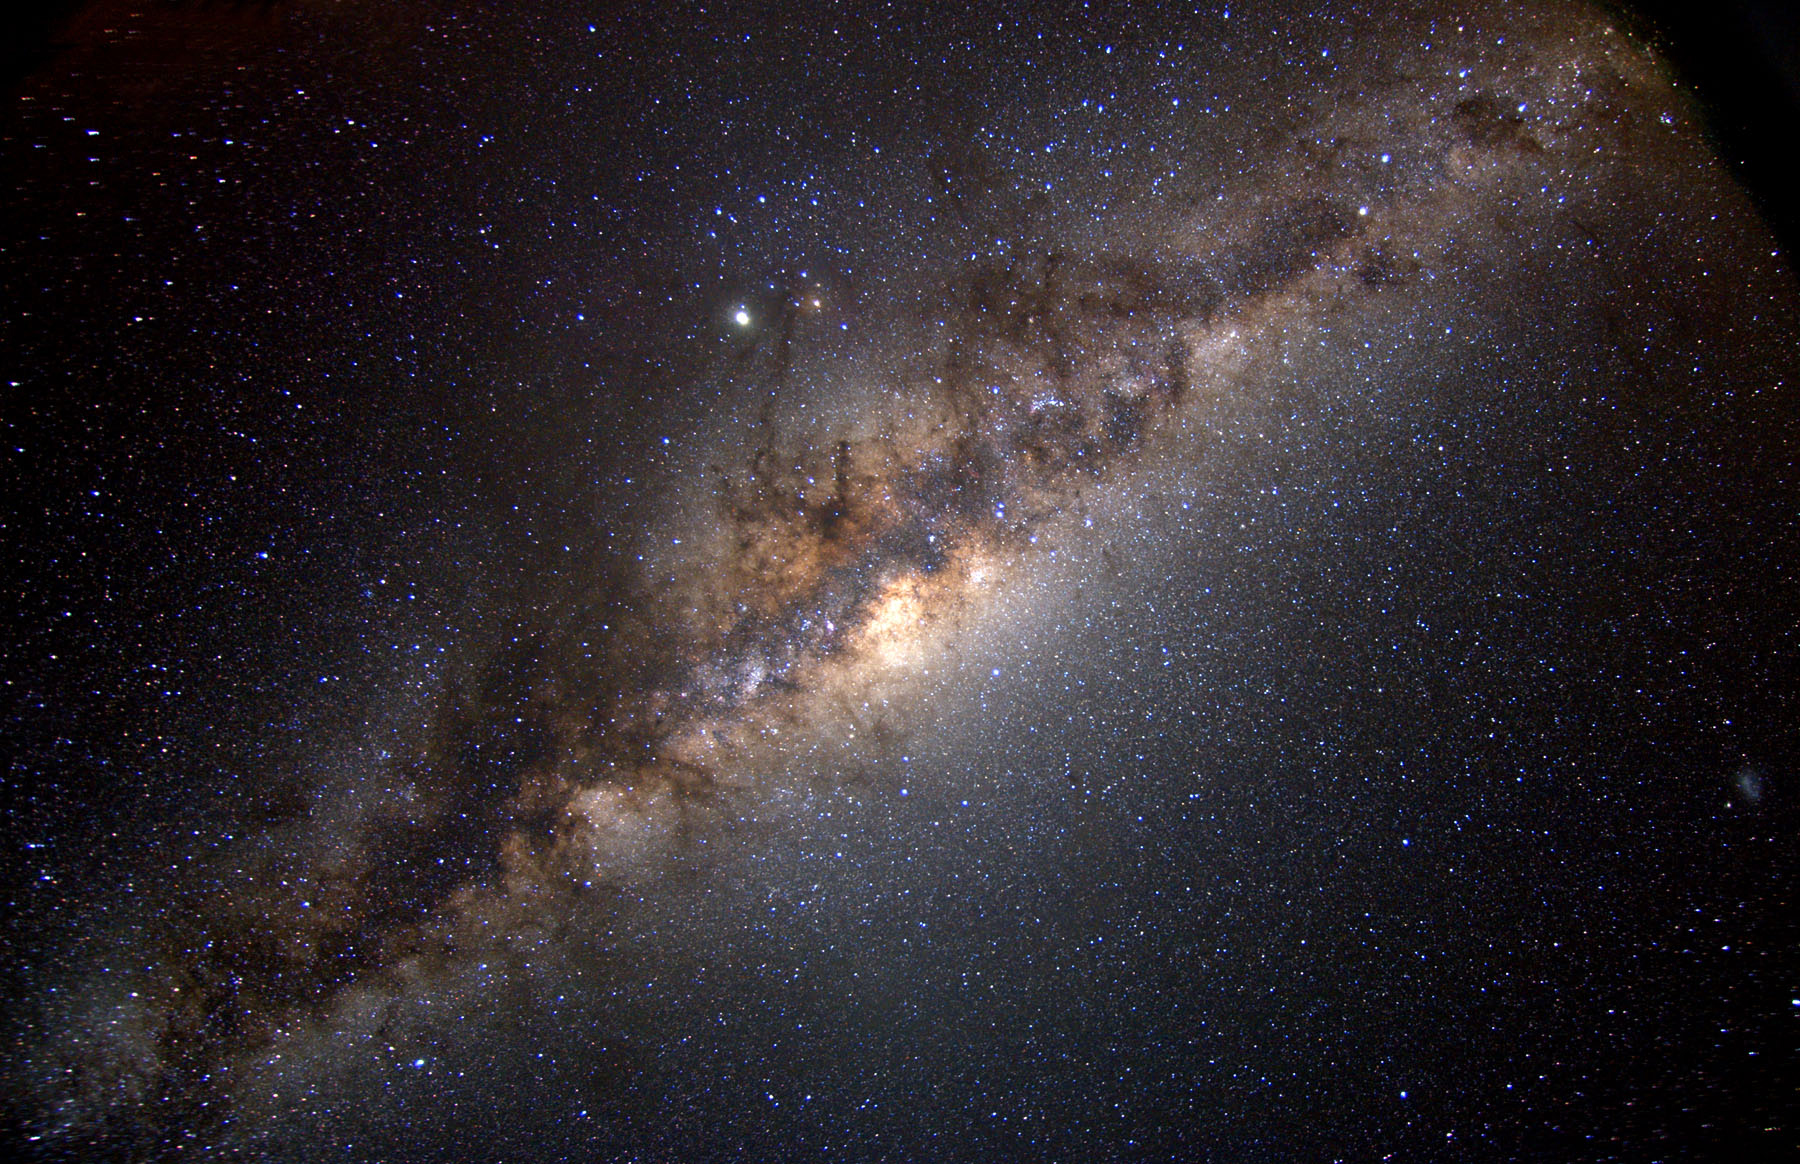 Milky Way photo by Brunier/NASA